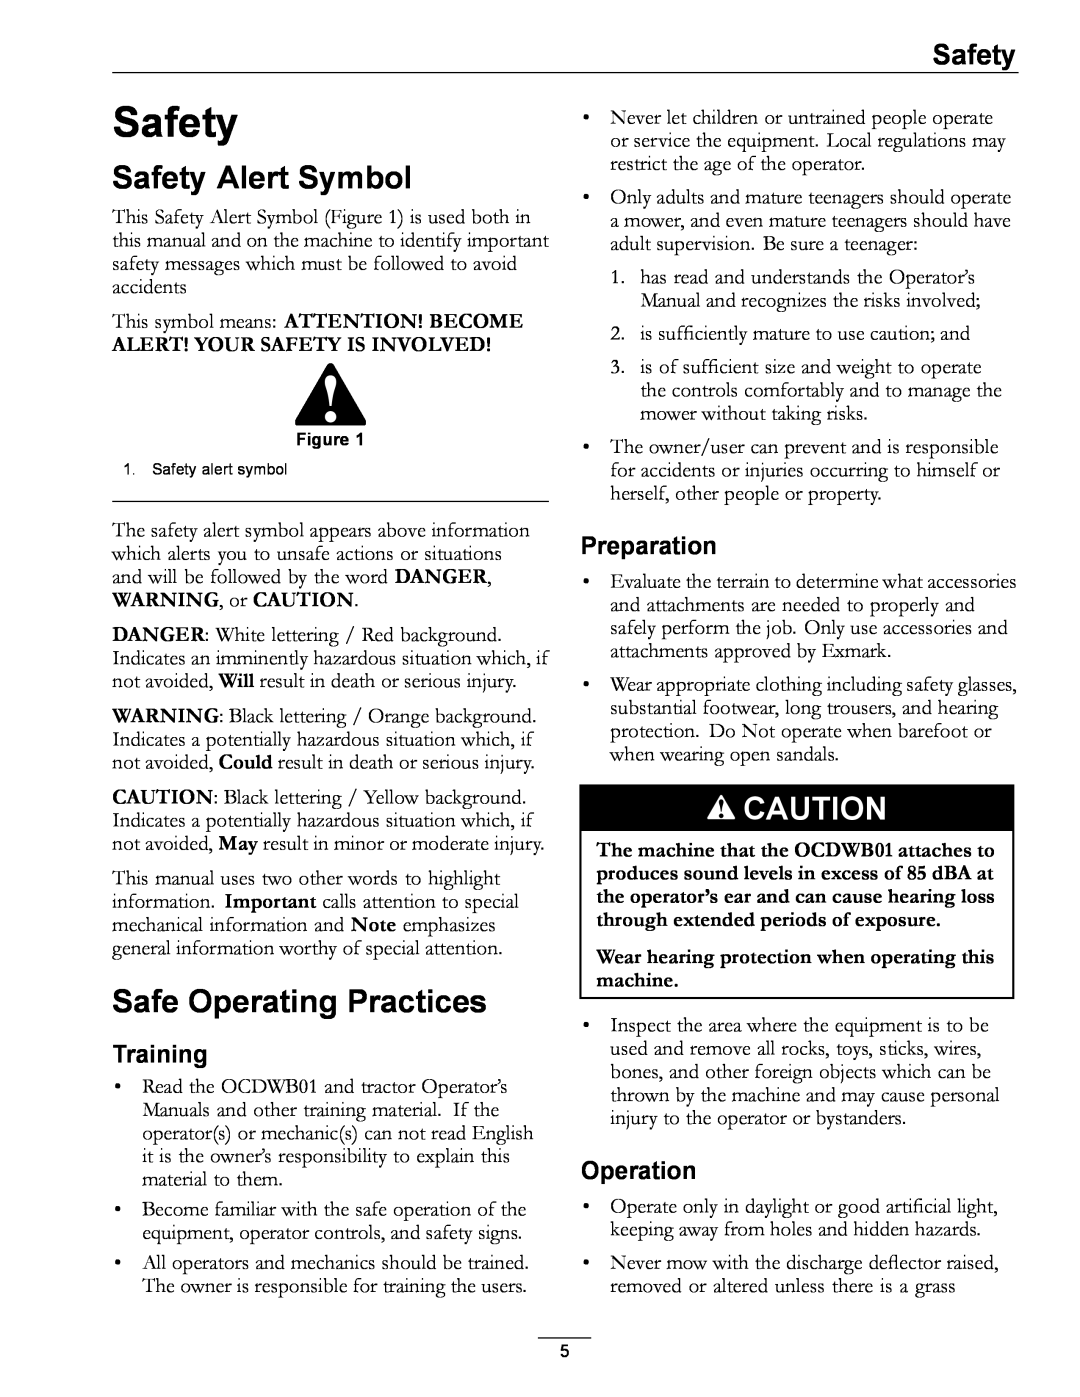 Exmark OCDWB01 manual Safety Alert Symbol, Safe Operating Practices, Training, Preparation, Operation 